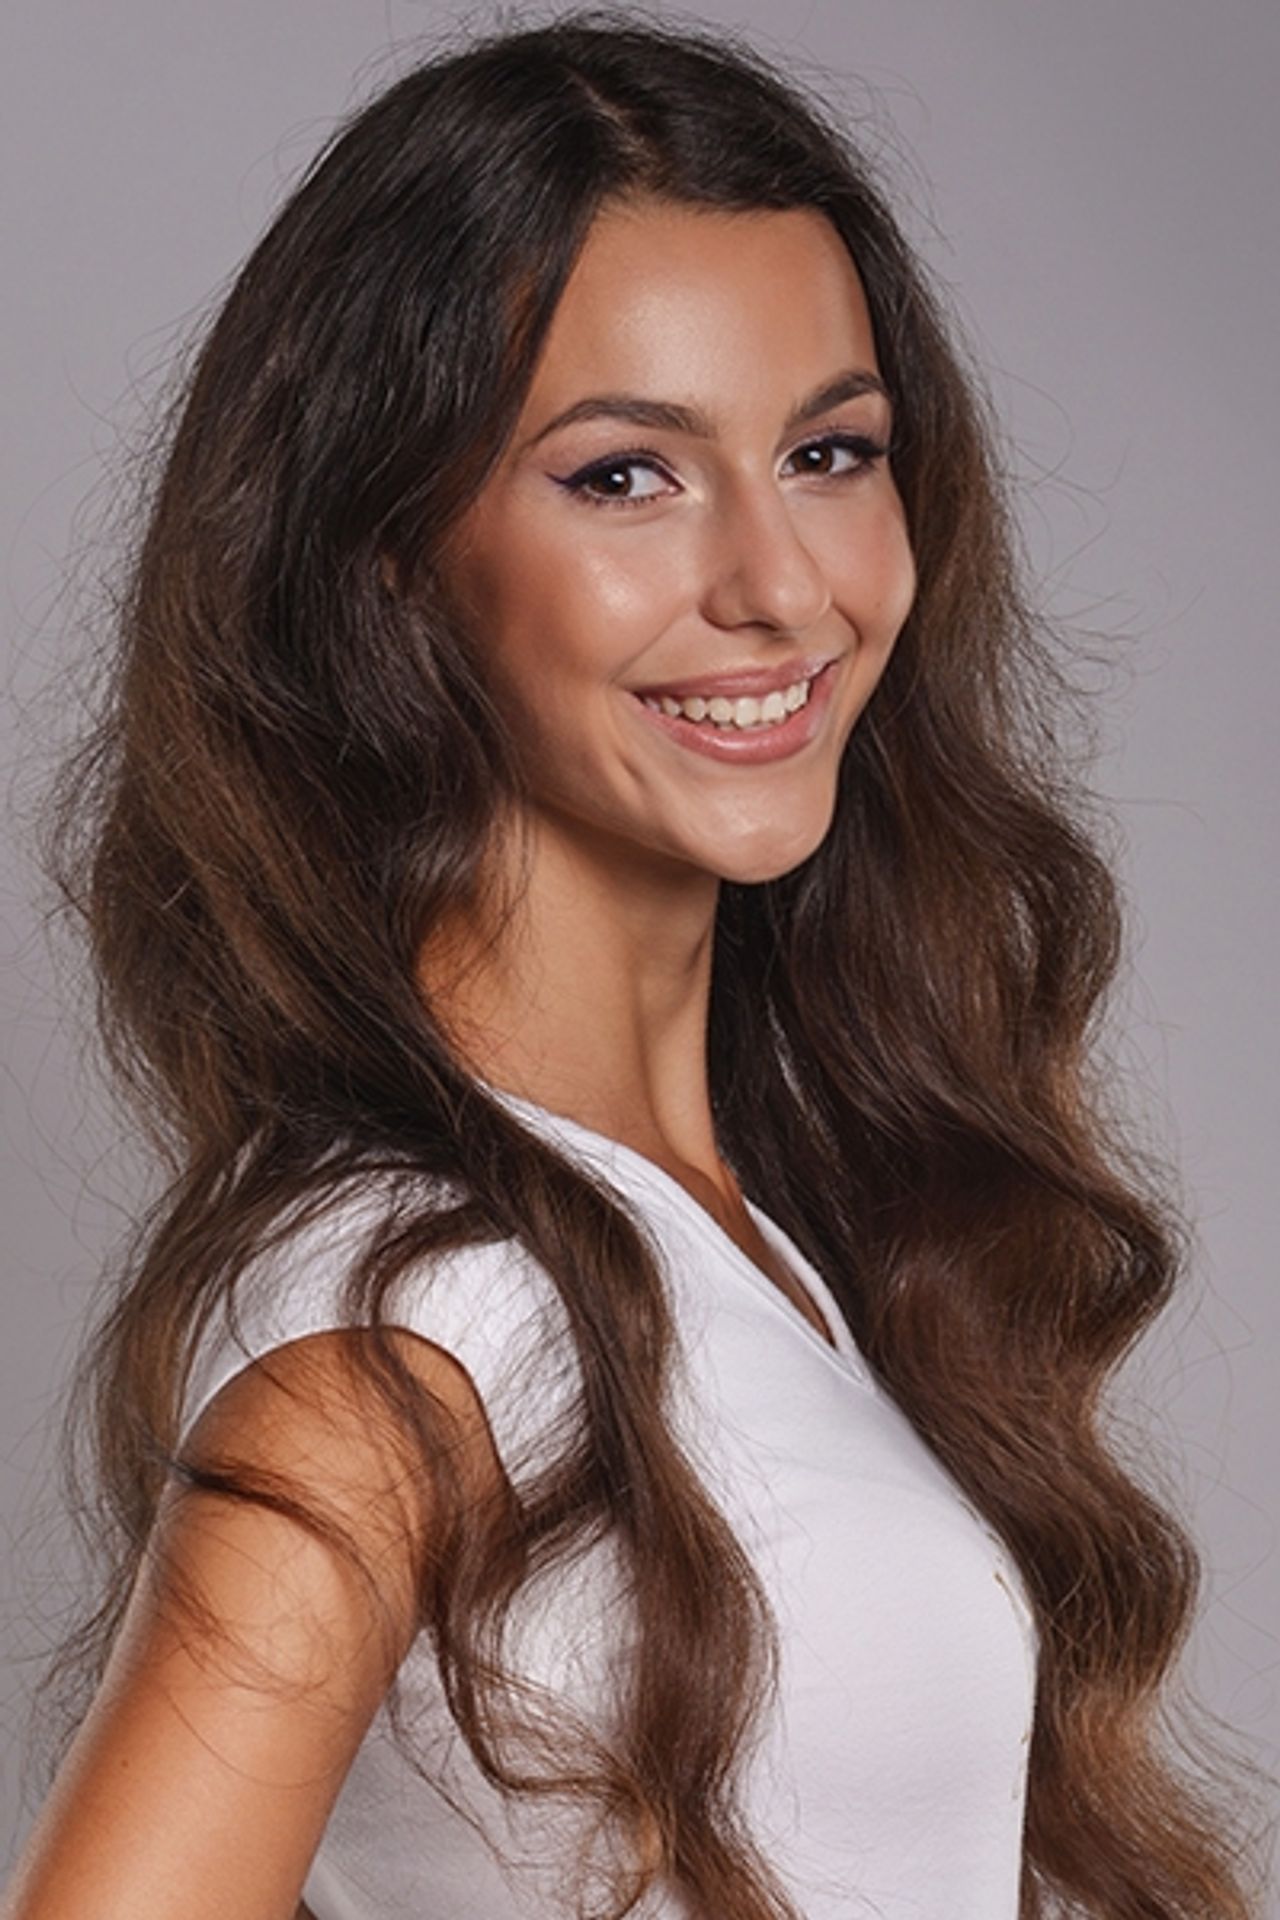 Helena Čermáková - Superfinalistky Miss ČR 2021 (2/8)